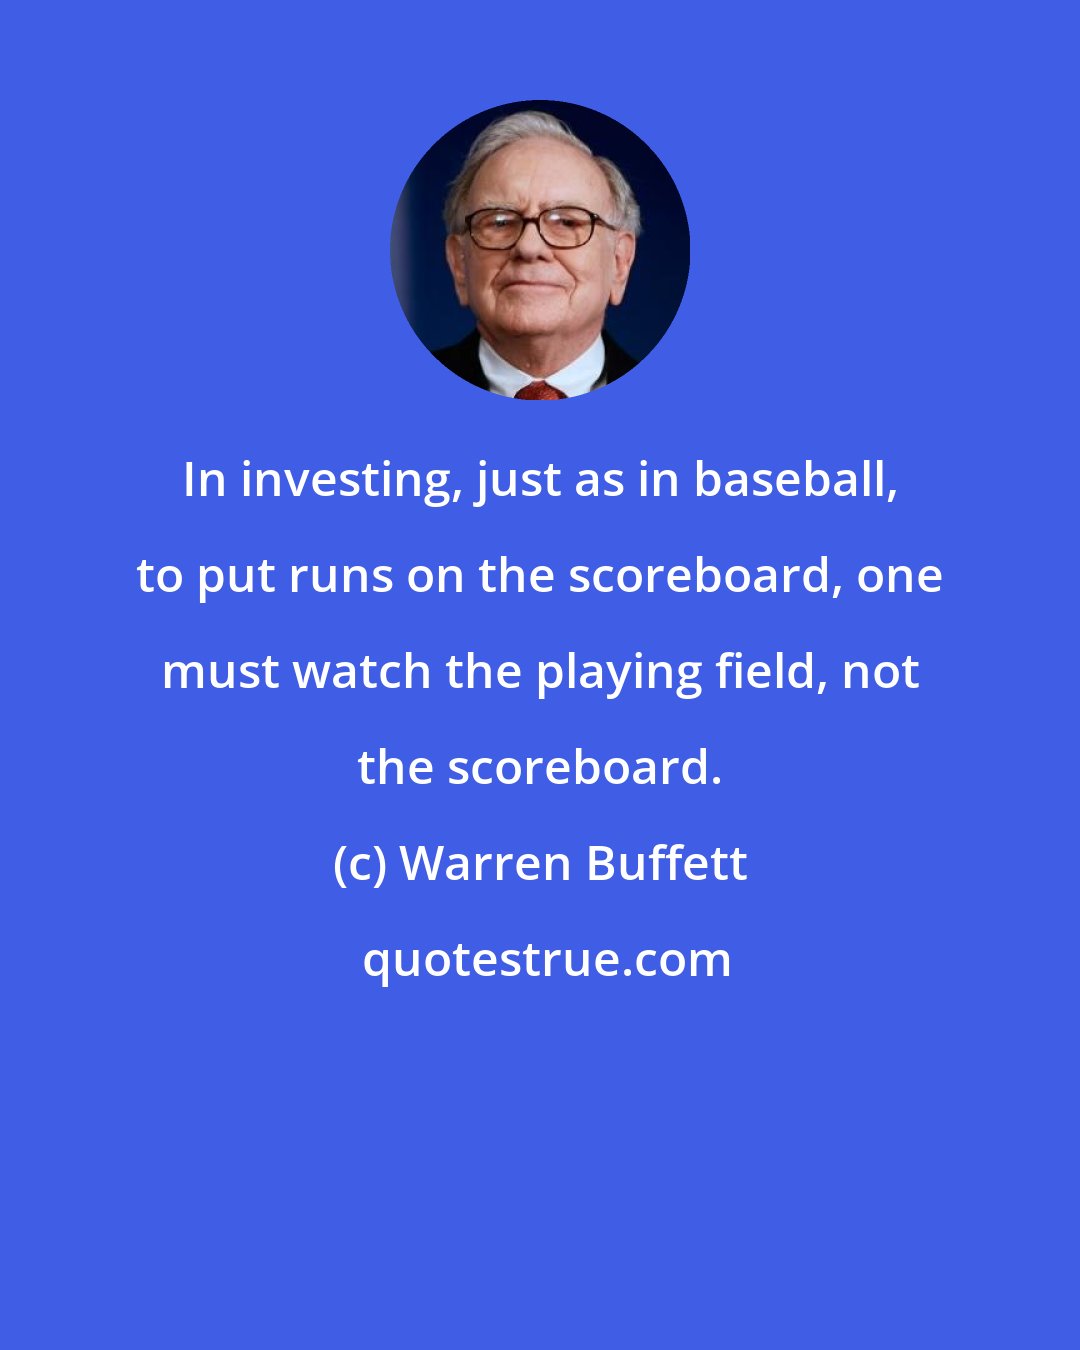 Warren Buffett: In investing, just as in baseball, to put runs on the scoreboard, one must watch the playing field, not the scoreboard.